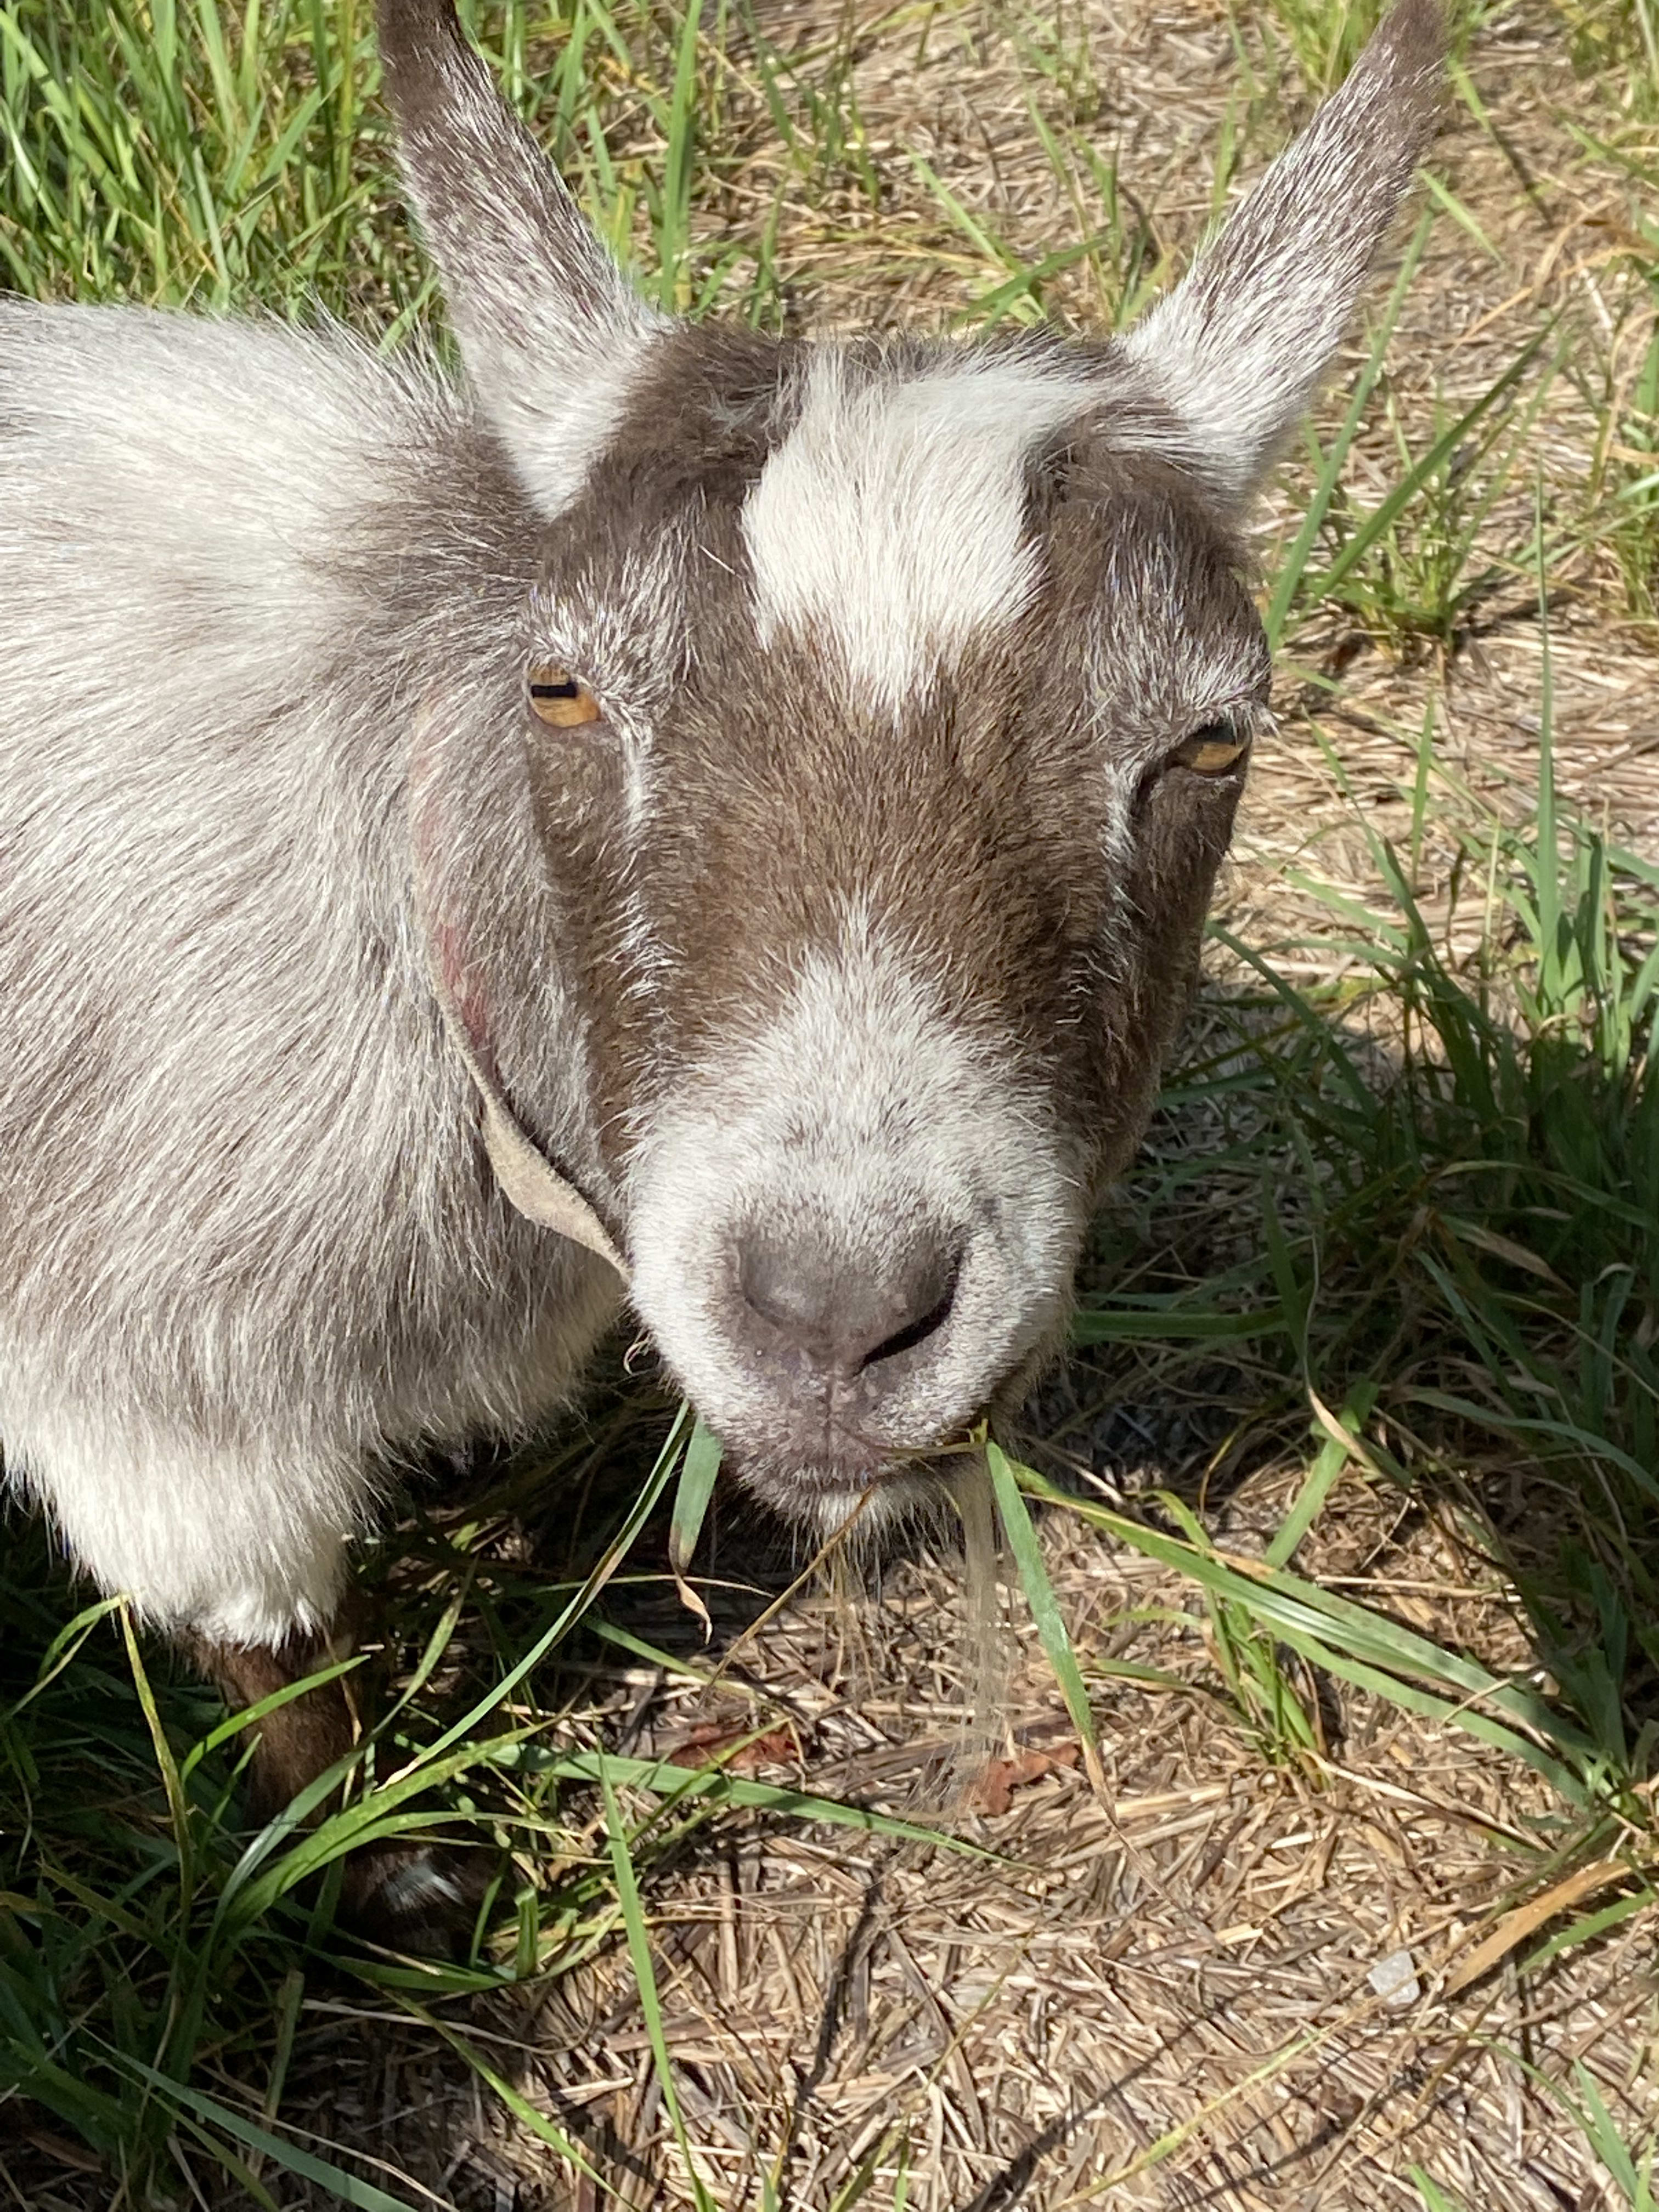 Mitsy the pet goat! 